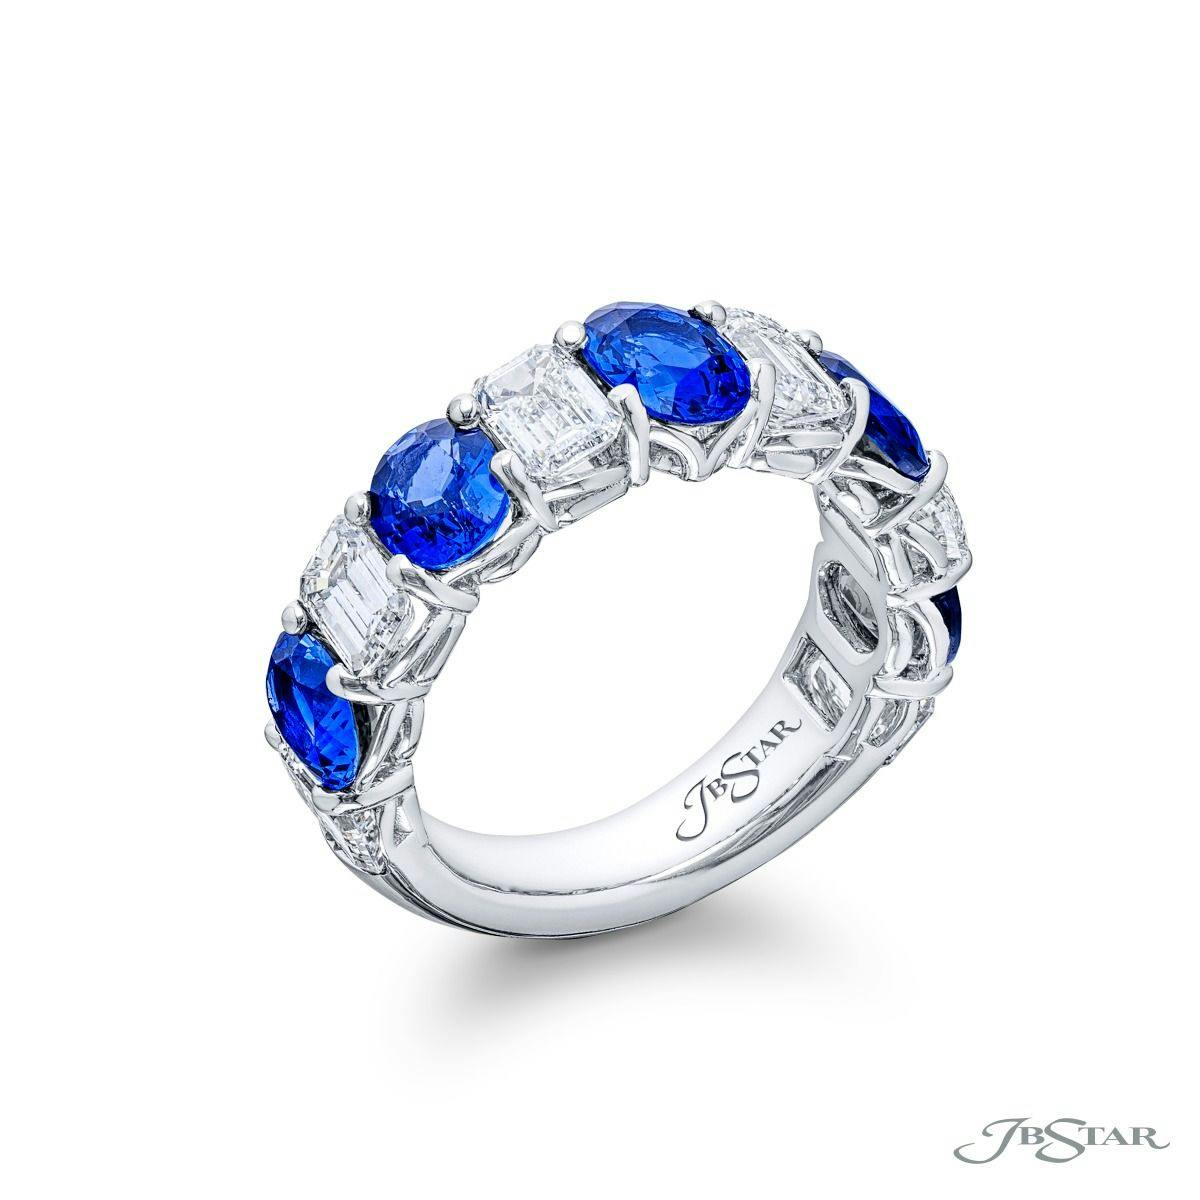 J.B. Star Platinum Blue Sapphire & Diamond Ring